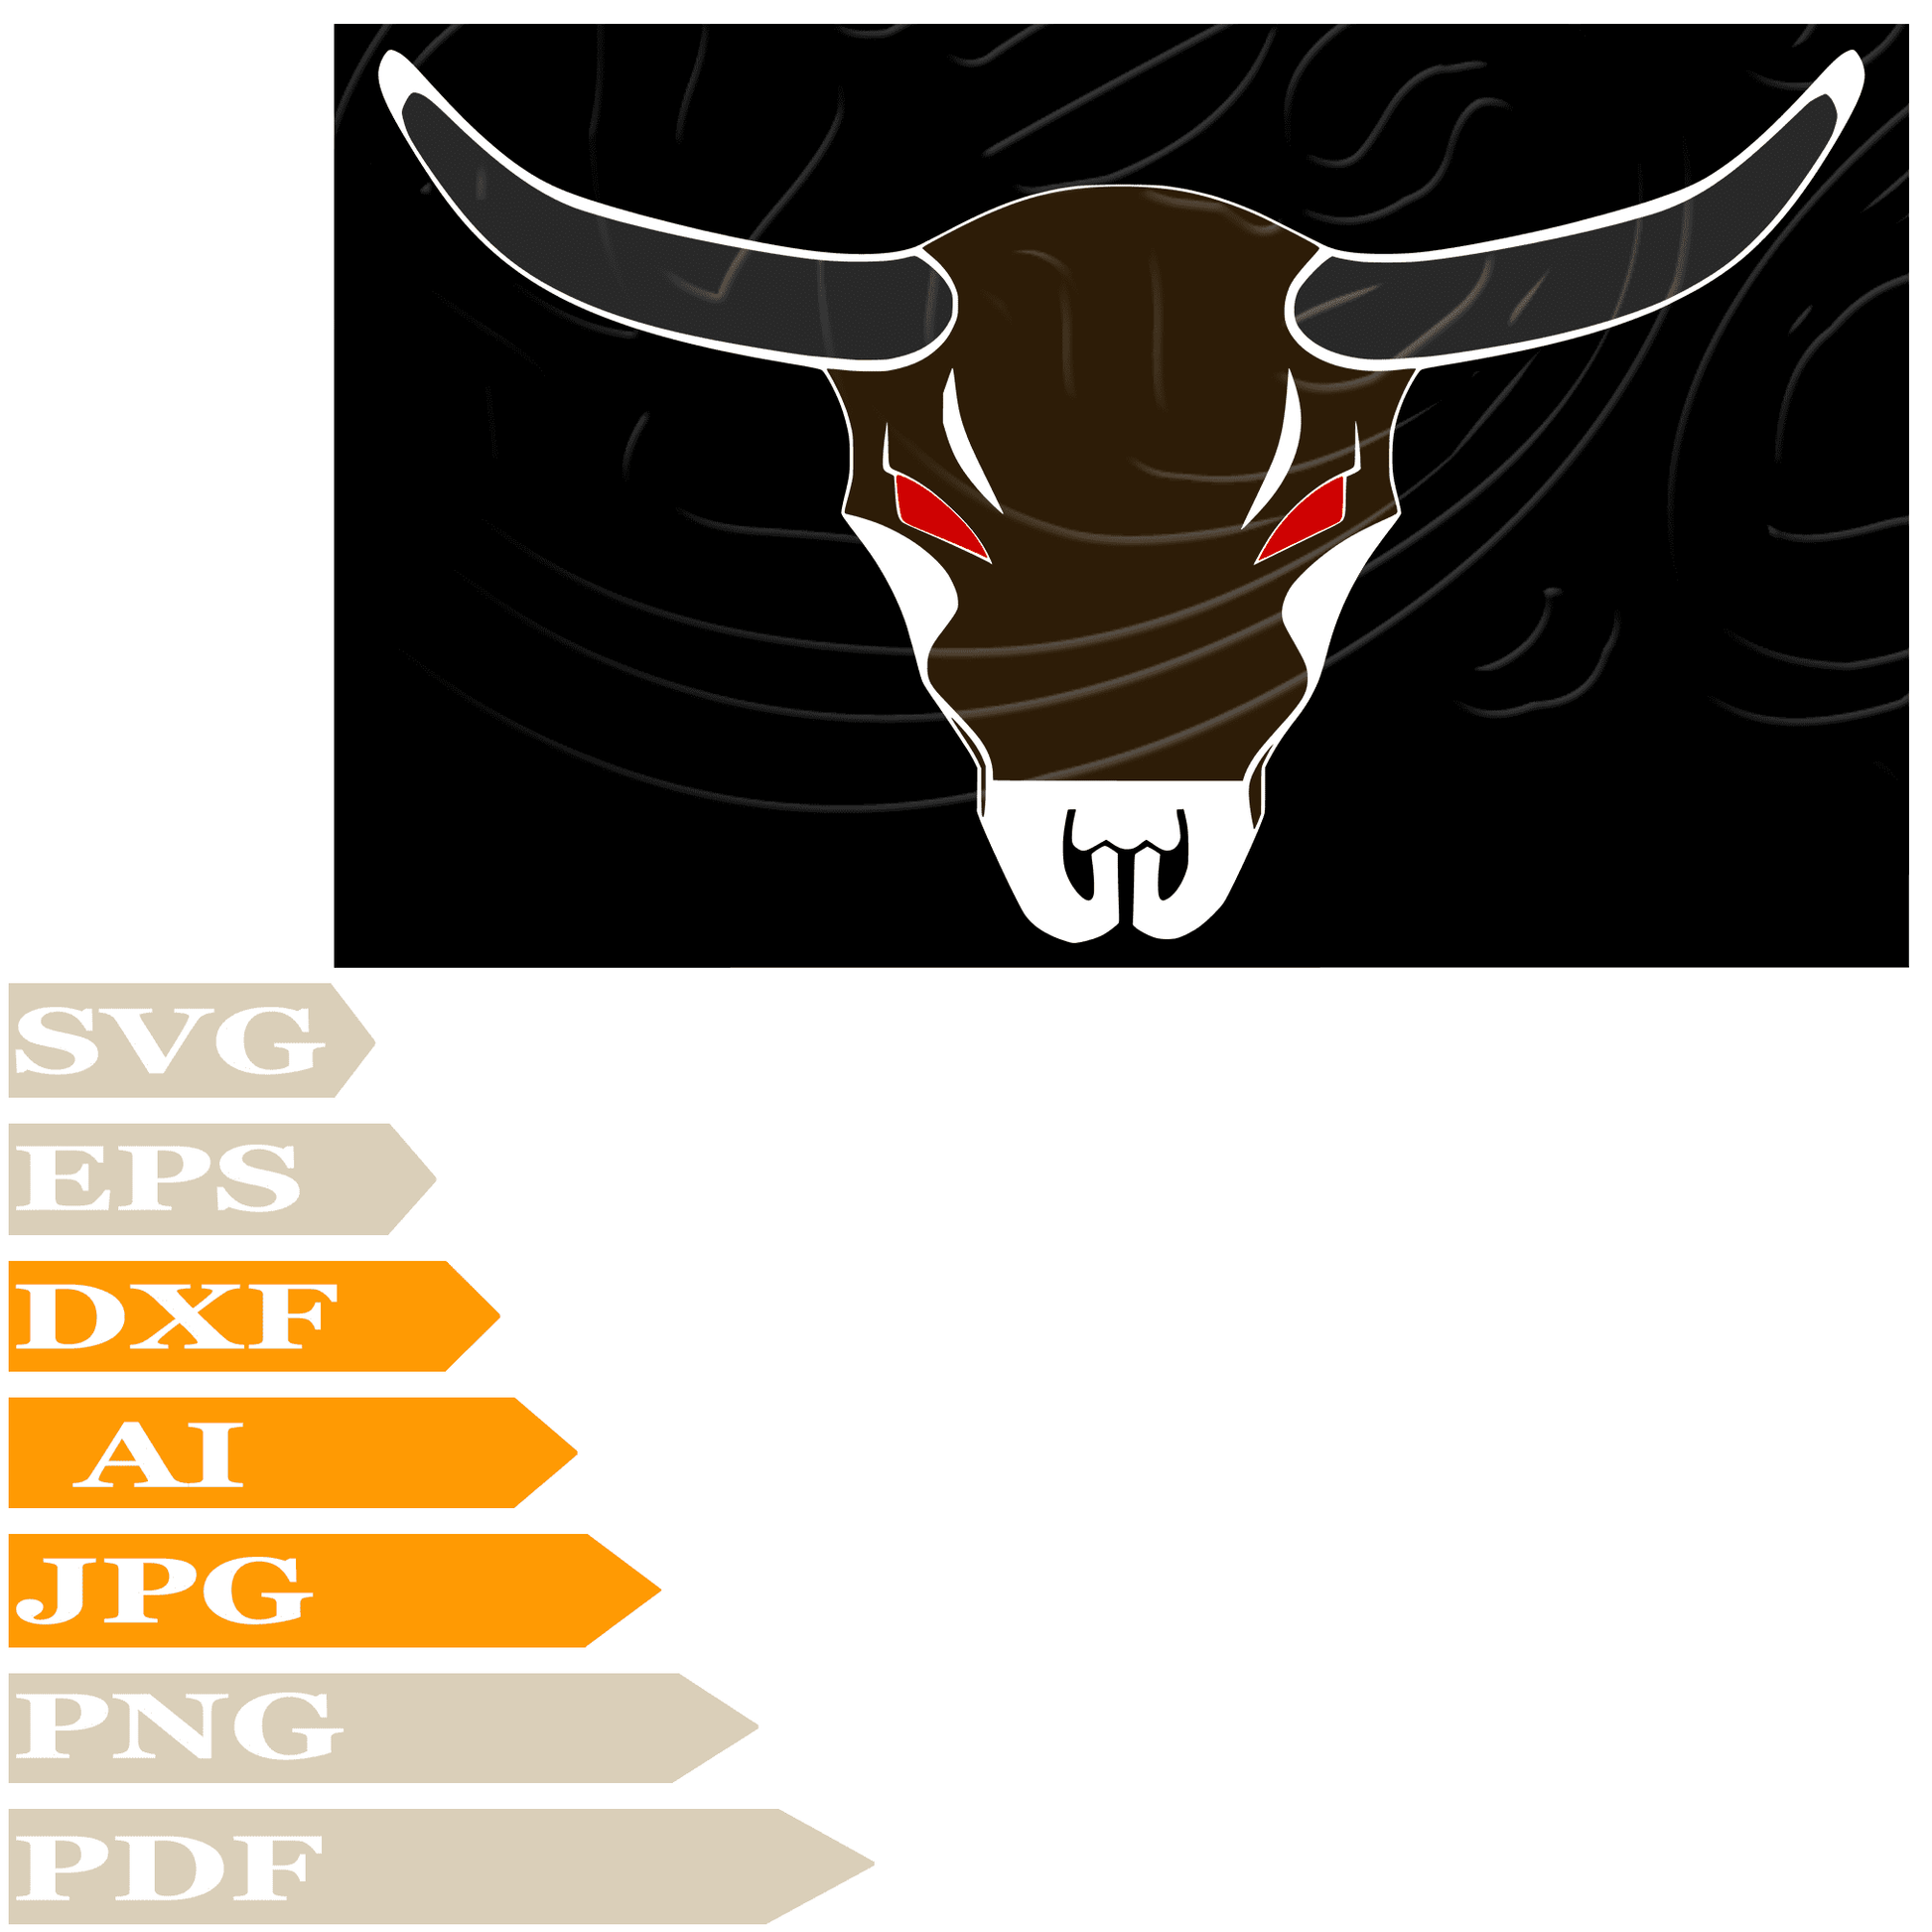 Sofvintage-Skull SVG-Skull Bull SVG Design-Bull Head SVG File-Bull Digital Vector Download-Bull Head PNG-Skull Bull For Cricut-Bull Clip art-Cut File-Skull Bull T-Shirt-Skull Wall Sticker-Bull Skull For Tattoo-Bull Hrad Printable-Skull Bull Silhouette